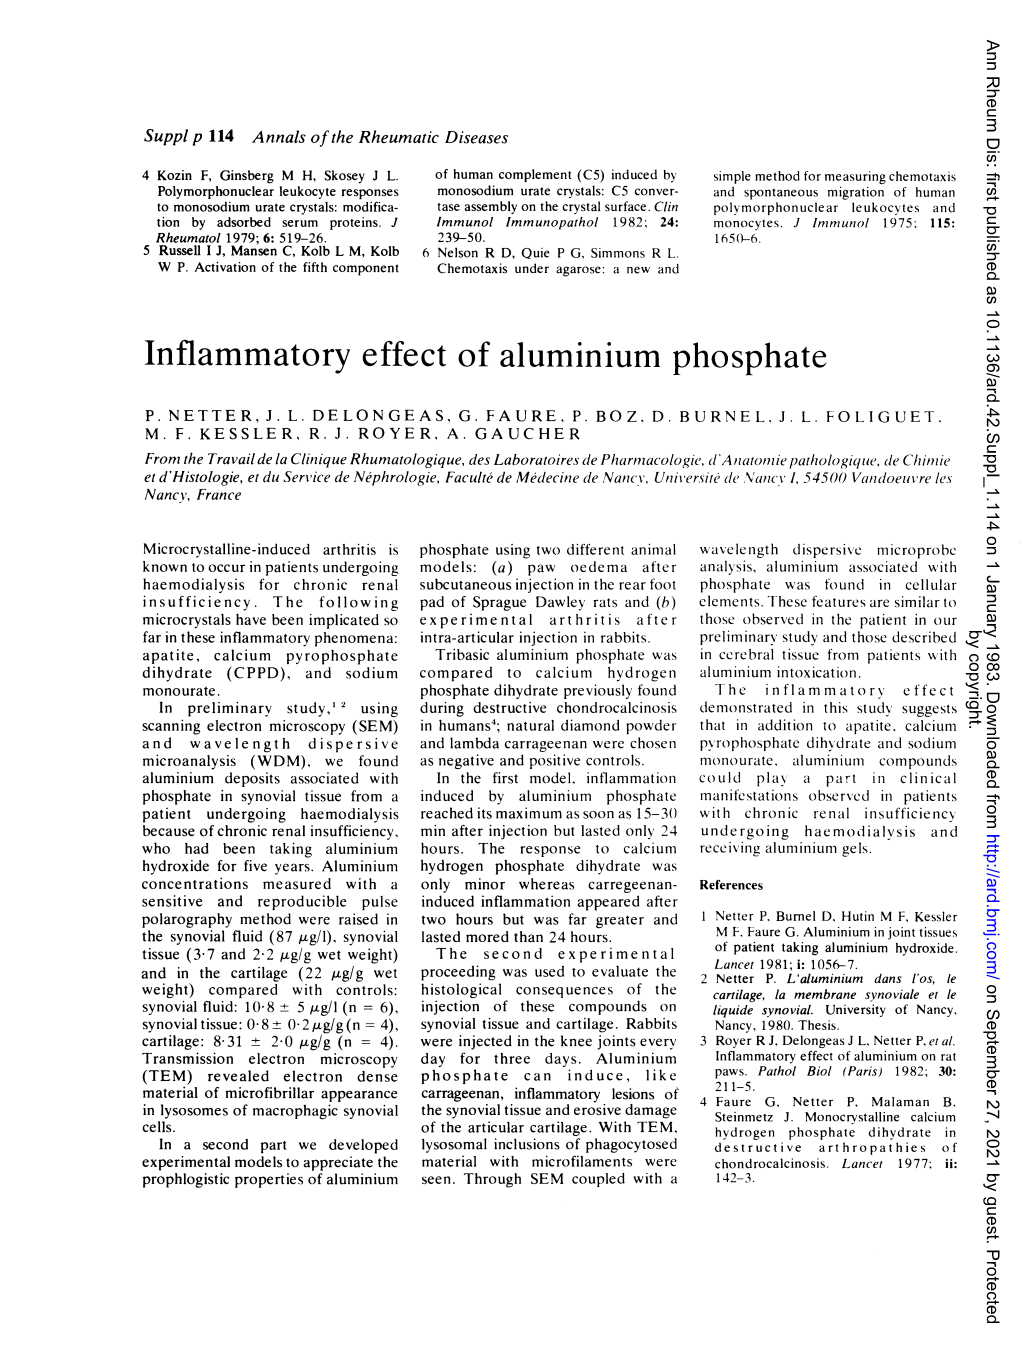 Inflammatory Effect of Aluminium Phosphate